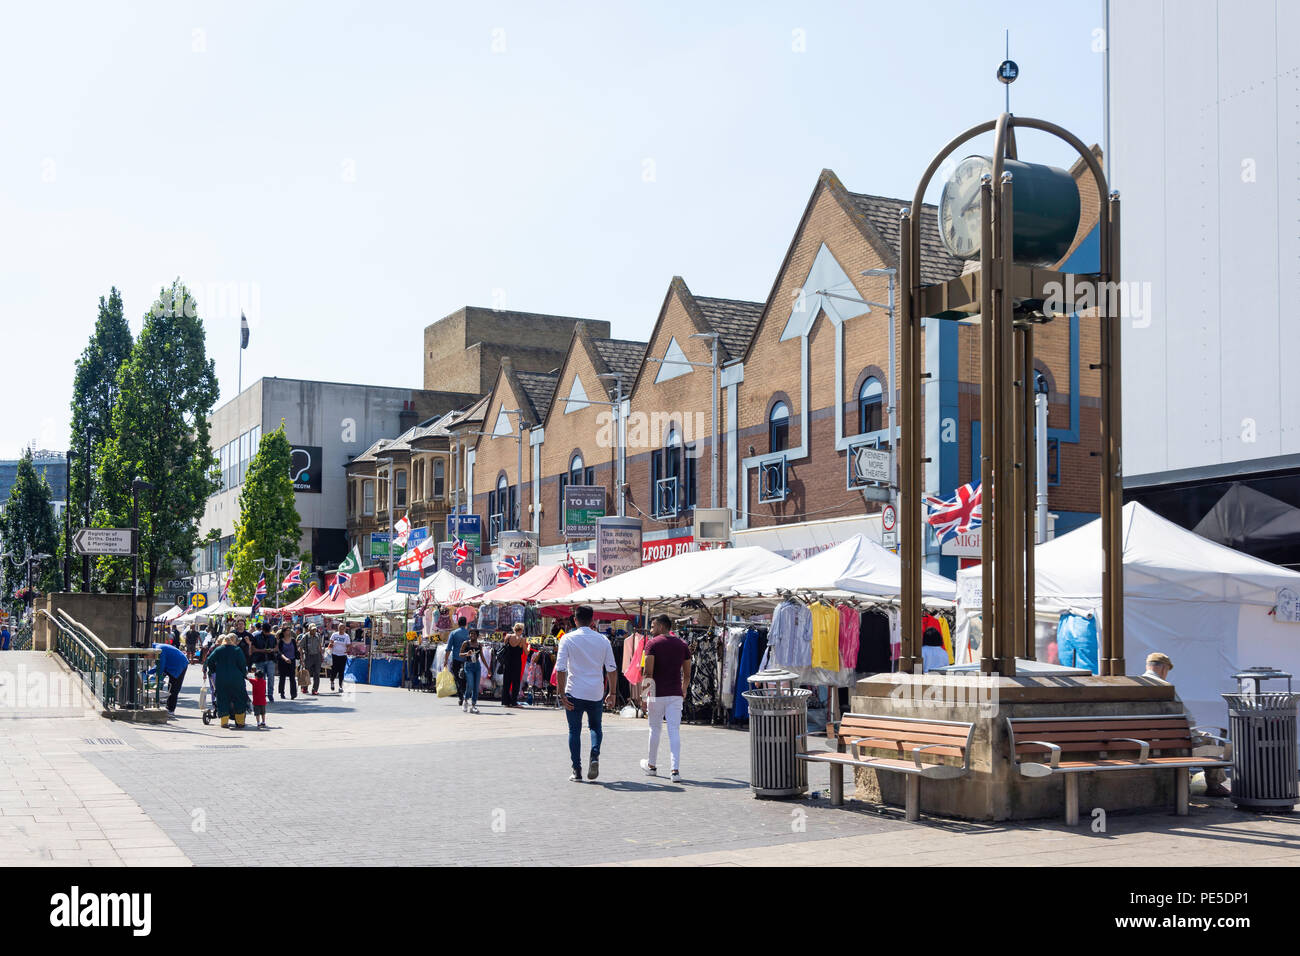 Street market, Ilford High Road, Ilford, London Borough of Redbridge, Greater London, England, United Kingdom Stock Photo